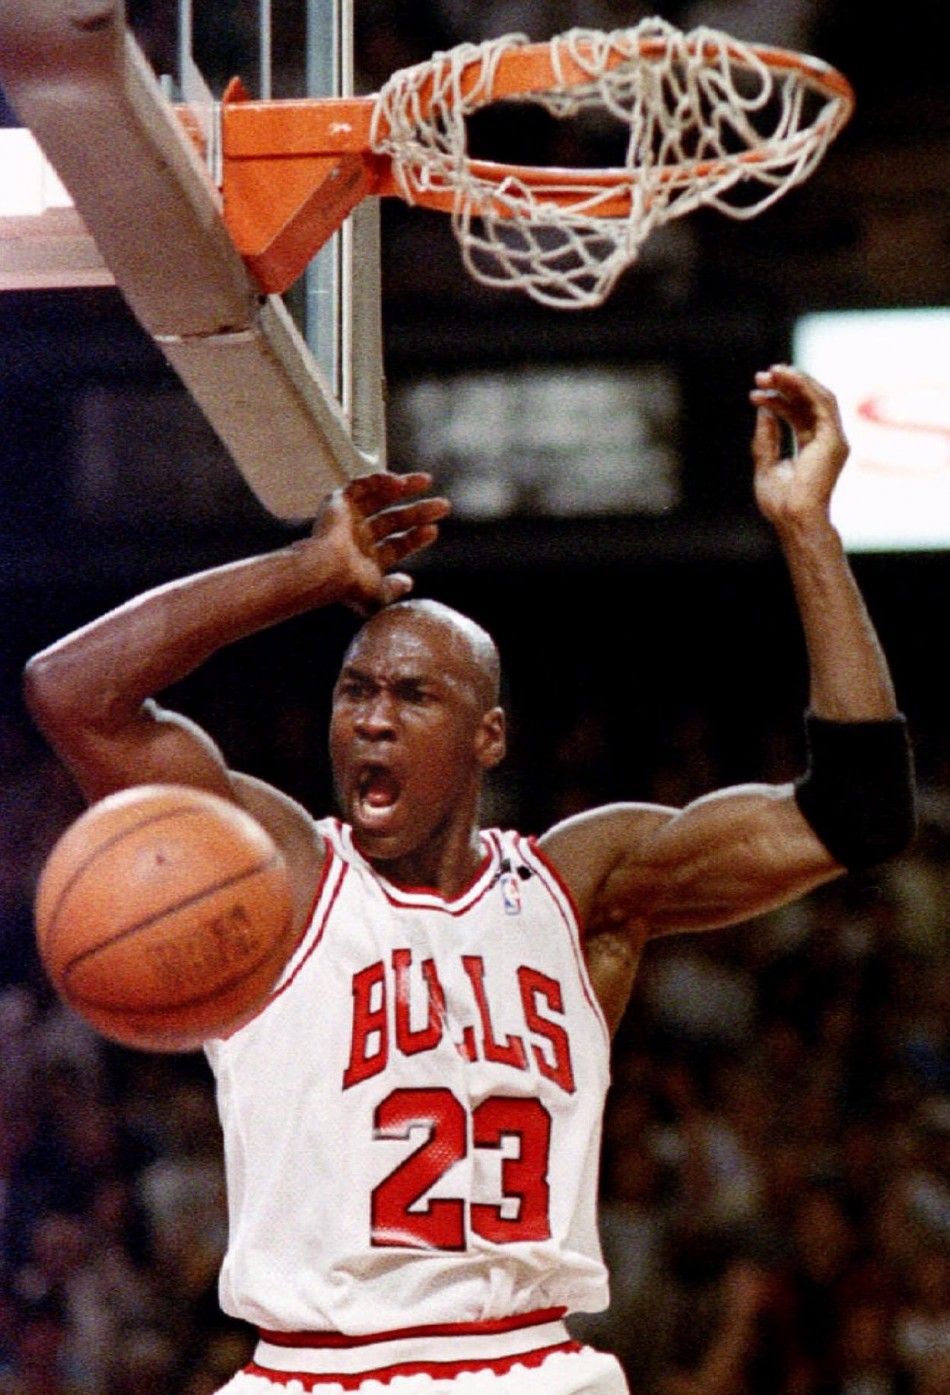 Basketball superstar Michael Jordan during an NBA Championship game against the Portland Trailblazers in June 1993